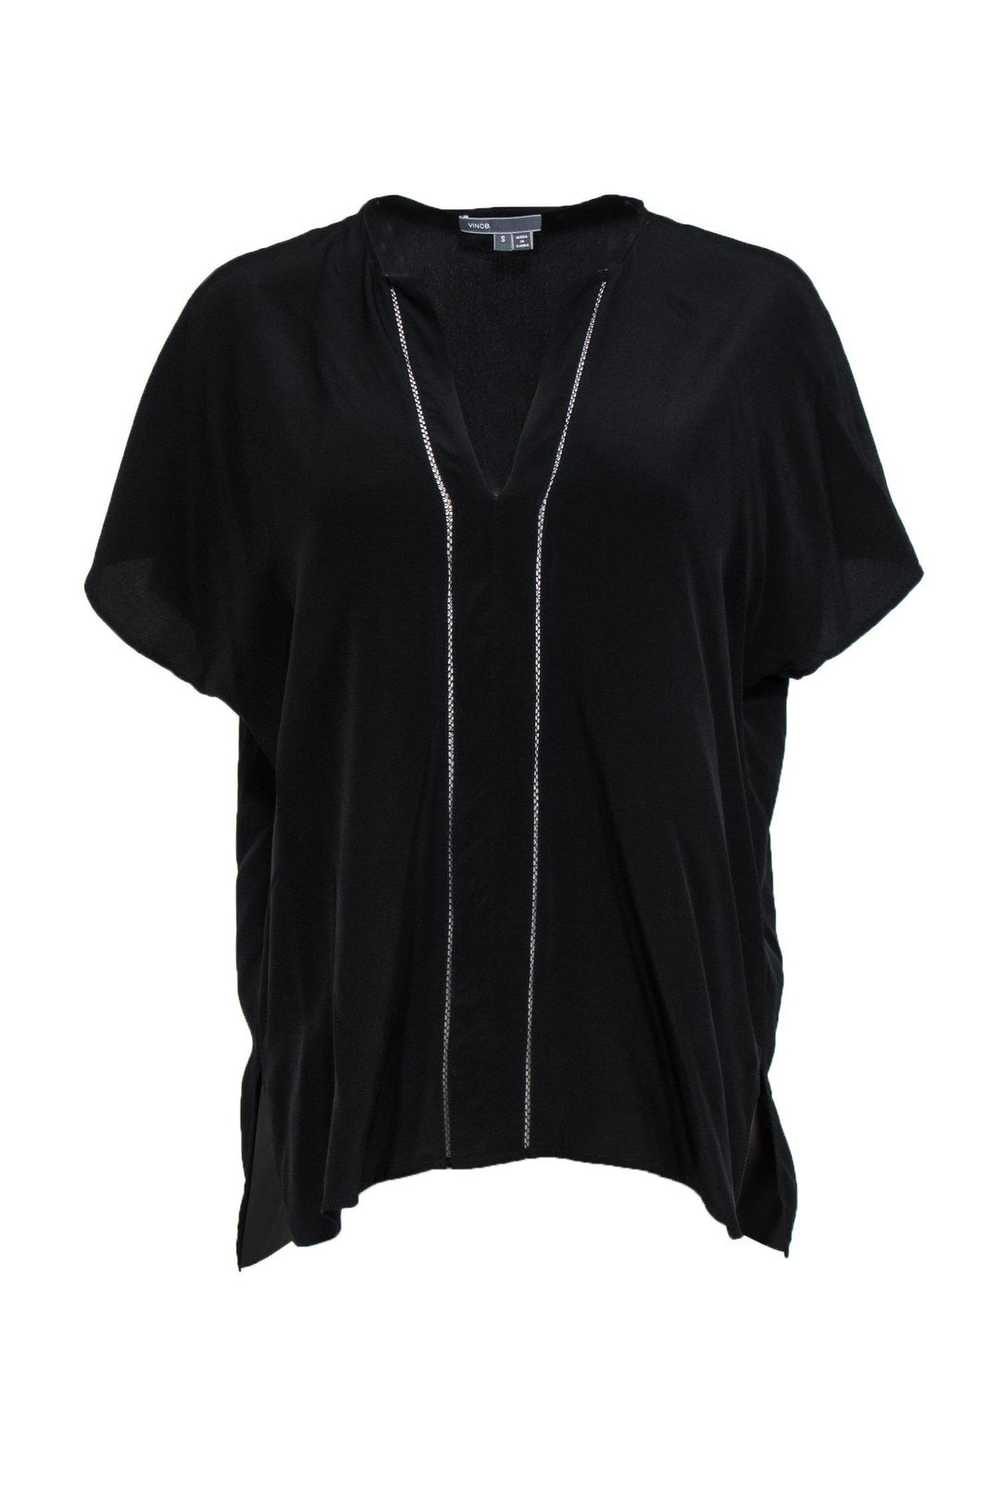 Vince - Black Short Sleeve Silk Top w/ Stitching … - image 1